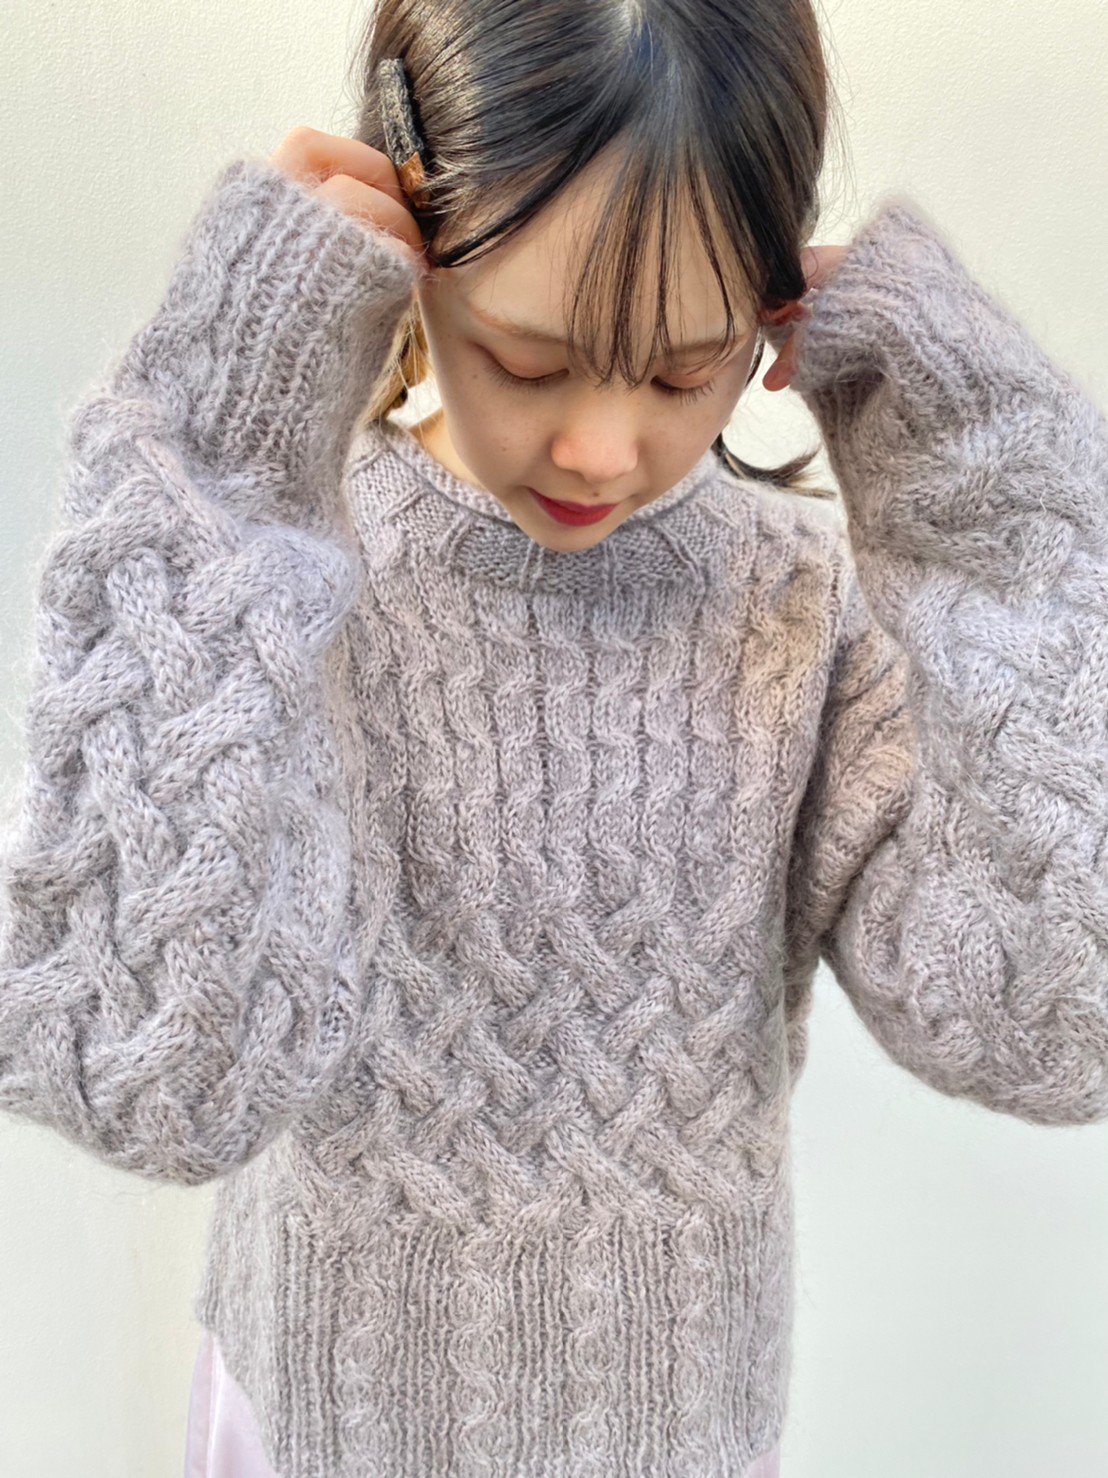 chacoal grey knit tops